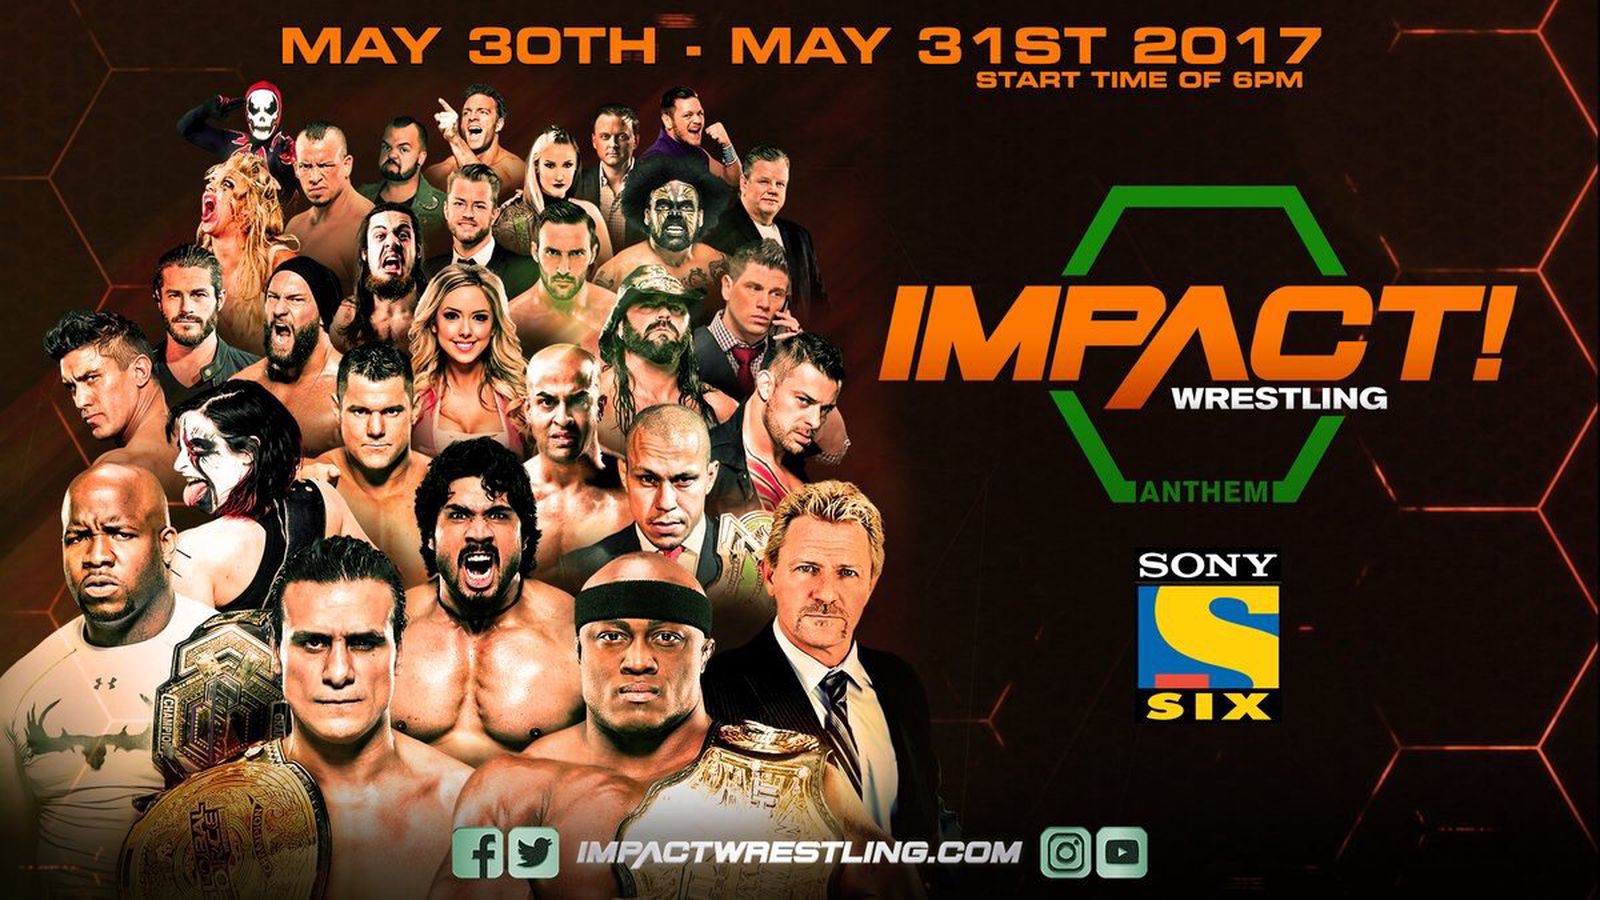 SPOILERT ALERT: March 2017 IMPACT Wrestling Tapings Day 1 